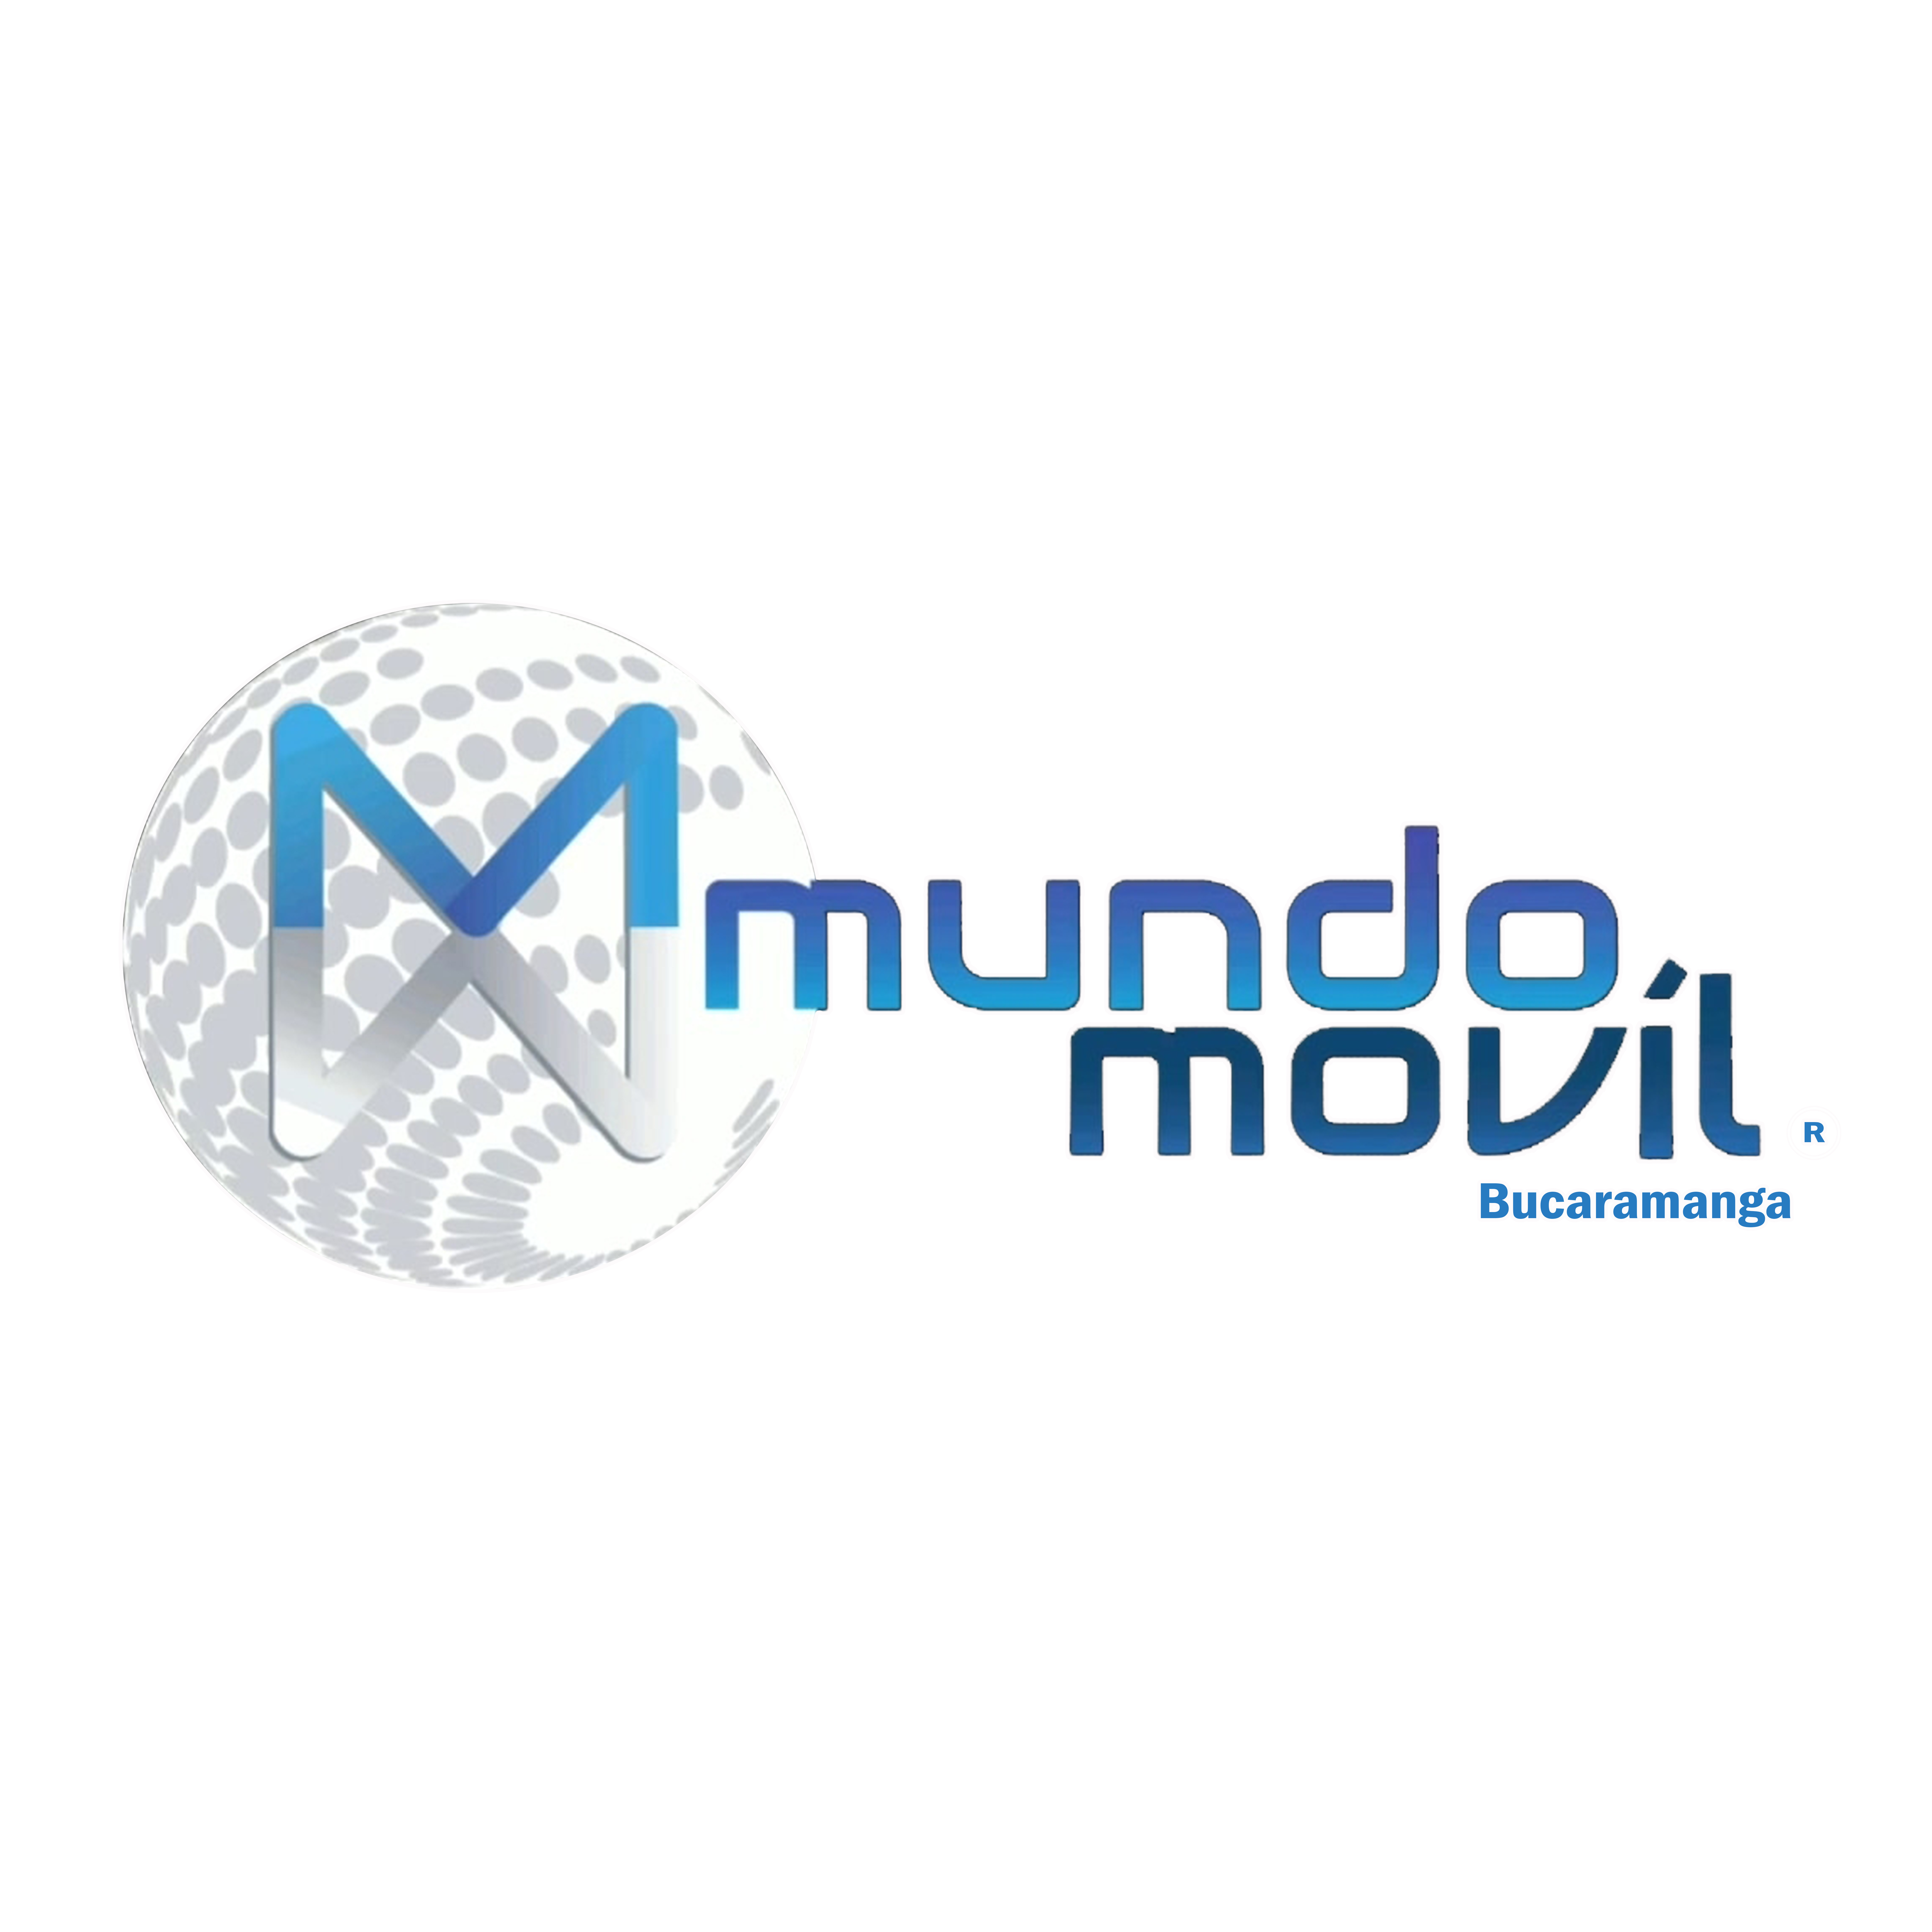 Mundo Movil Bucaramanga